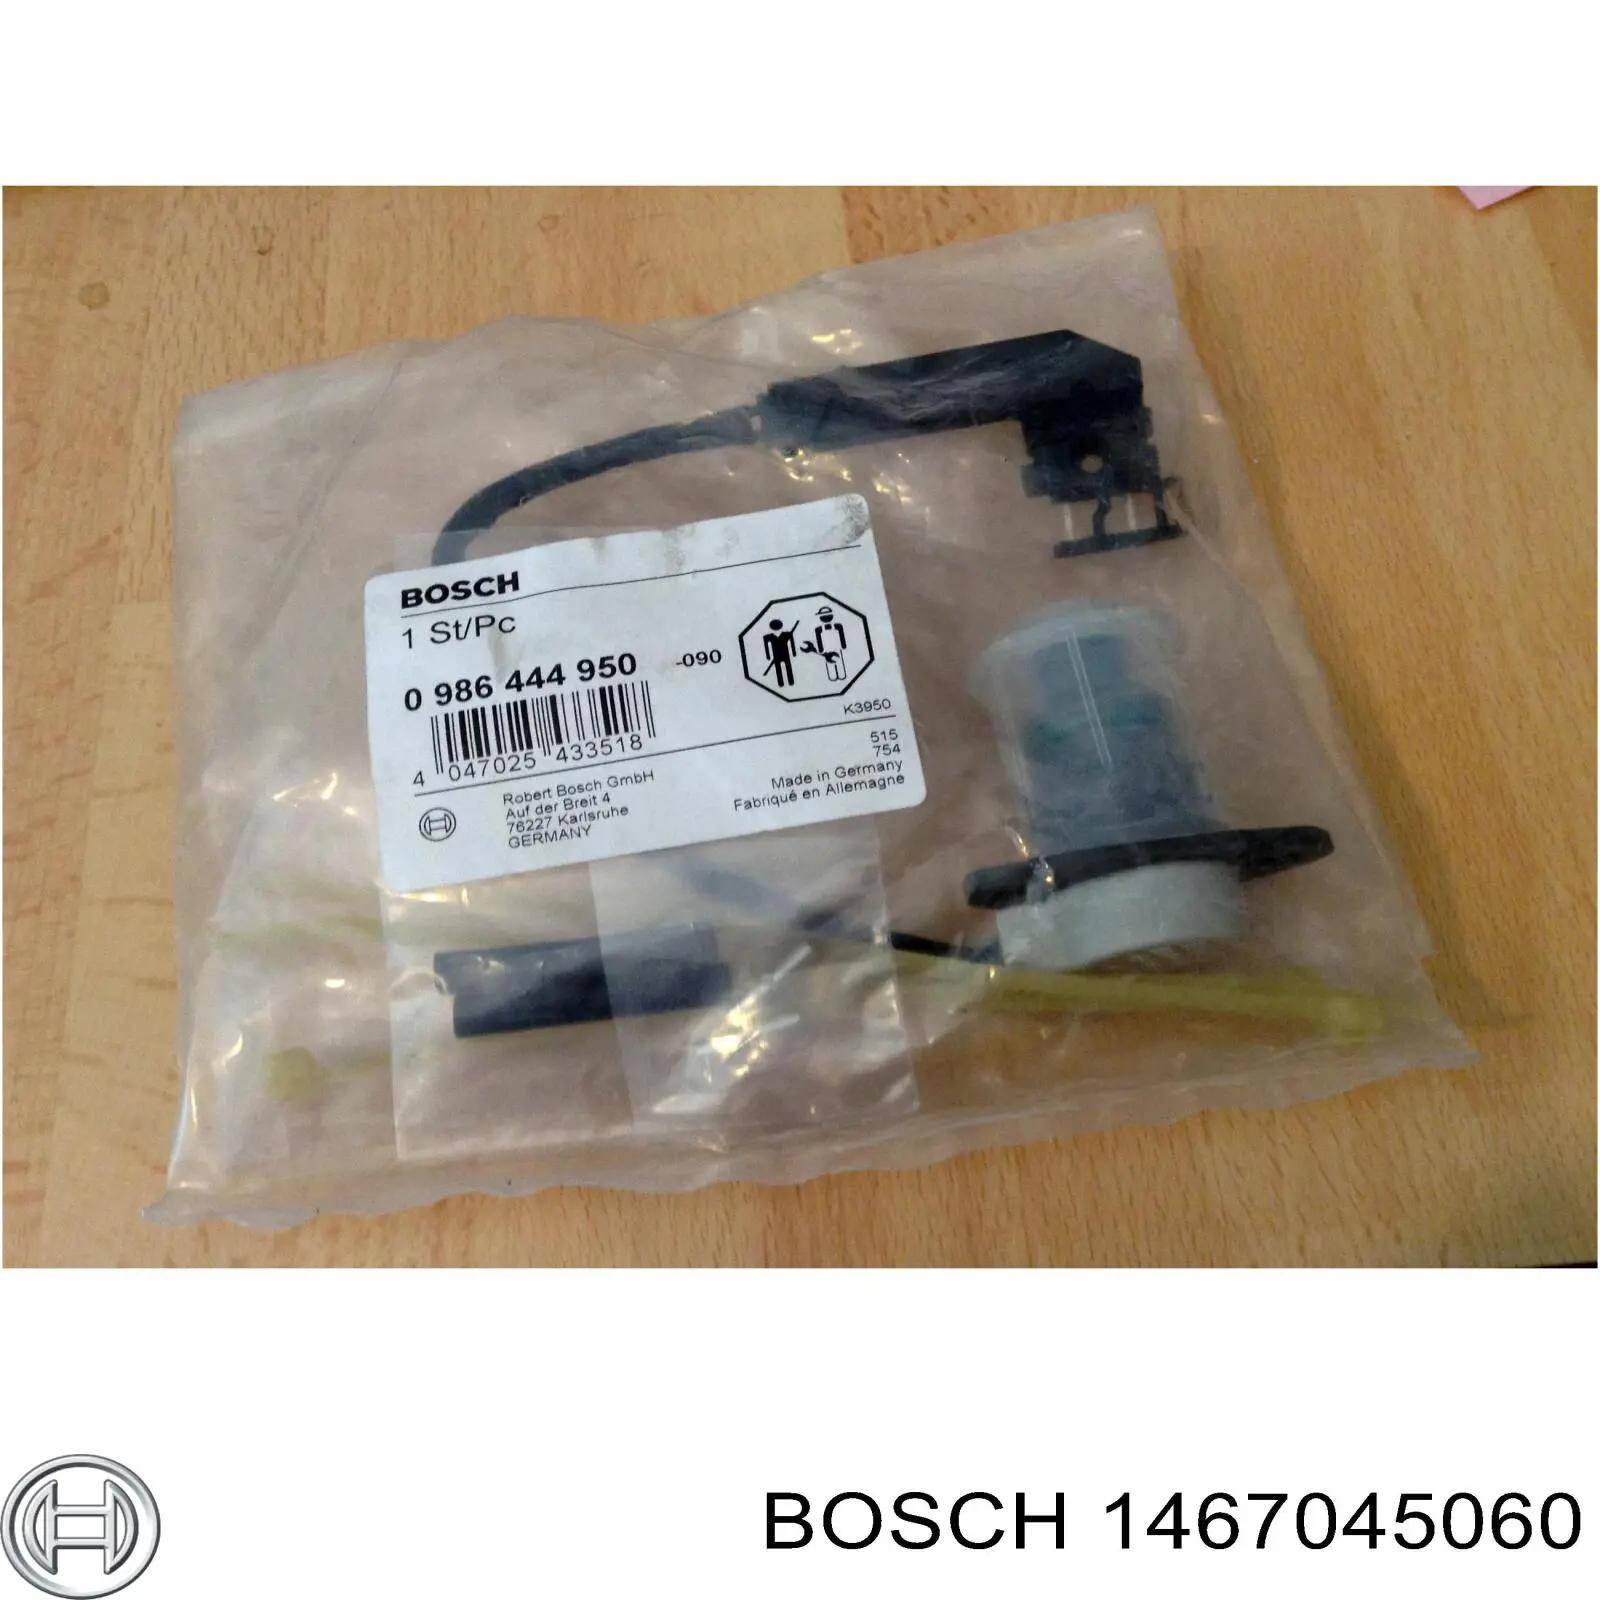 1467045060 Bosch válvula da bomba de combustível de pressão alta de corte de combustível (diesel-stop)